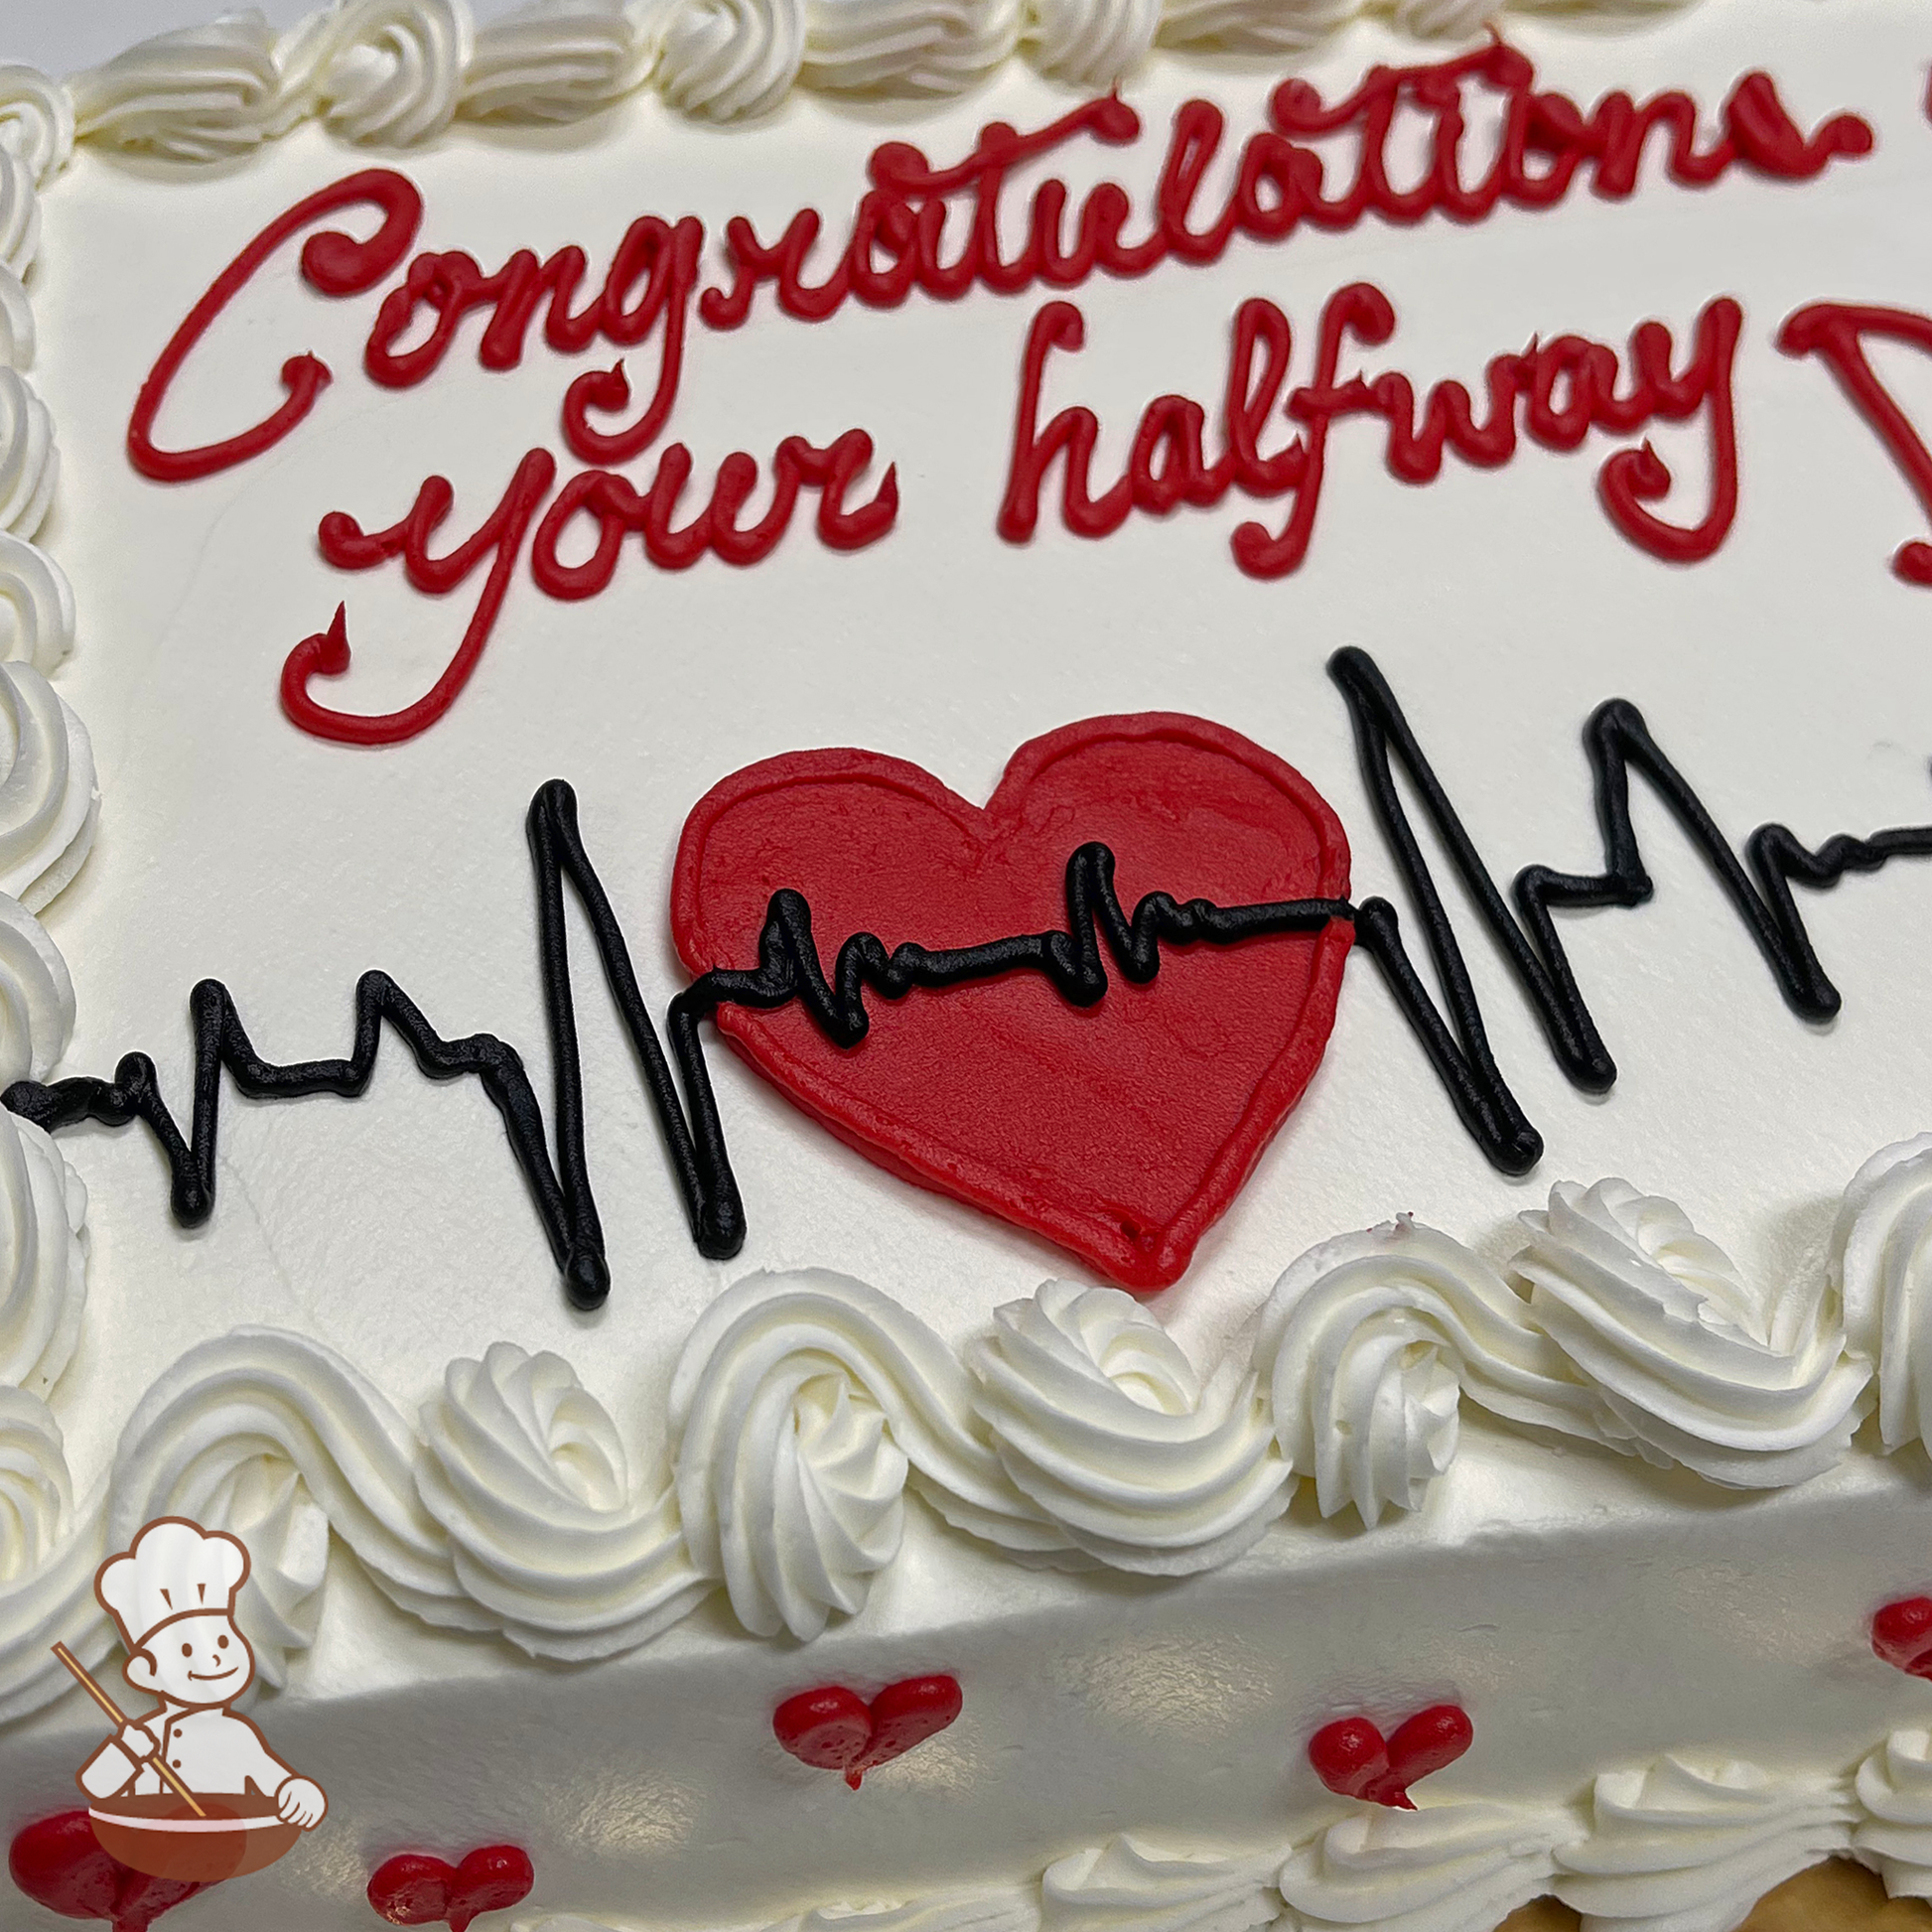 Graduation sheet cake with buttercream heart and EKG heart monitor beats.